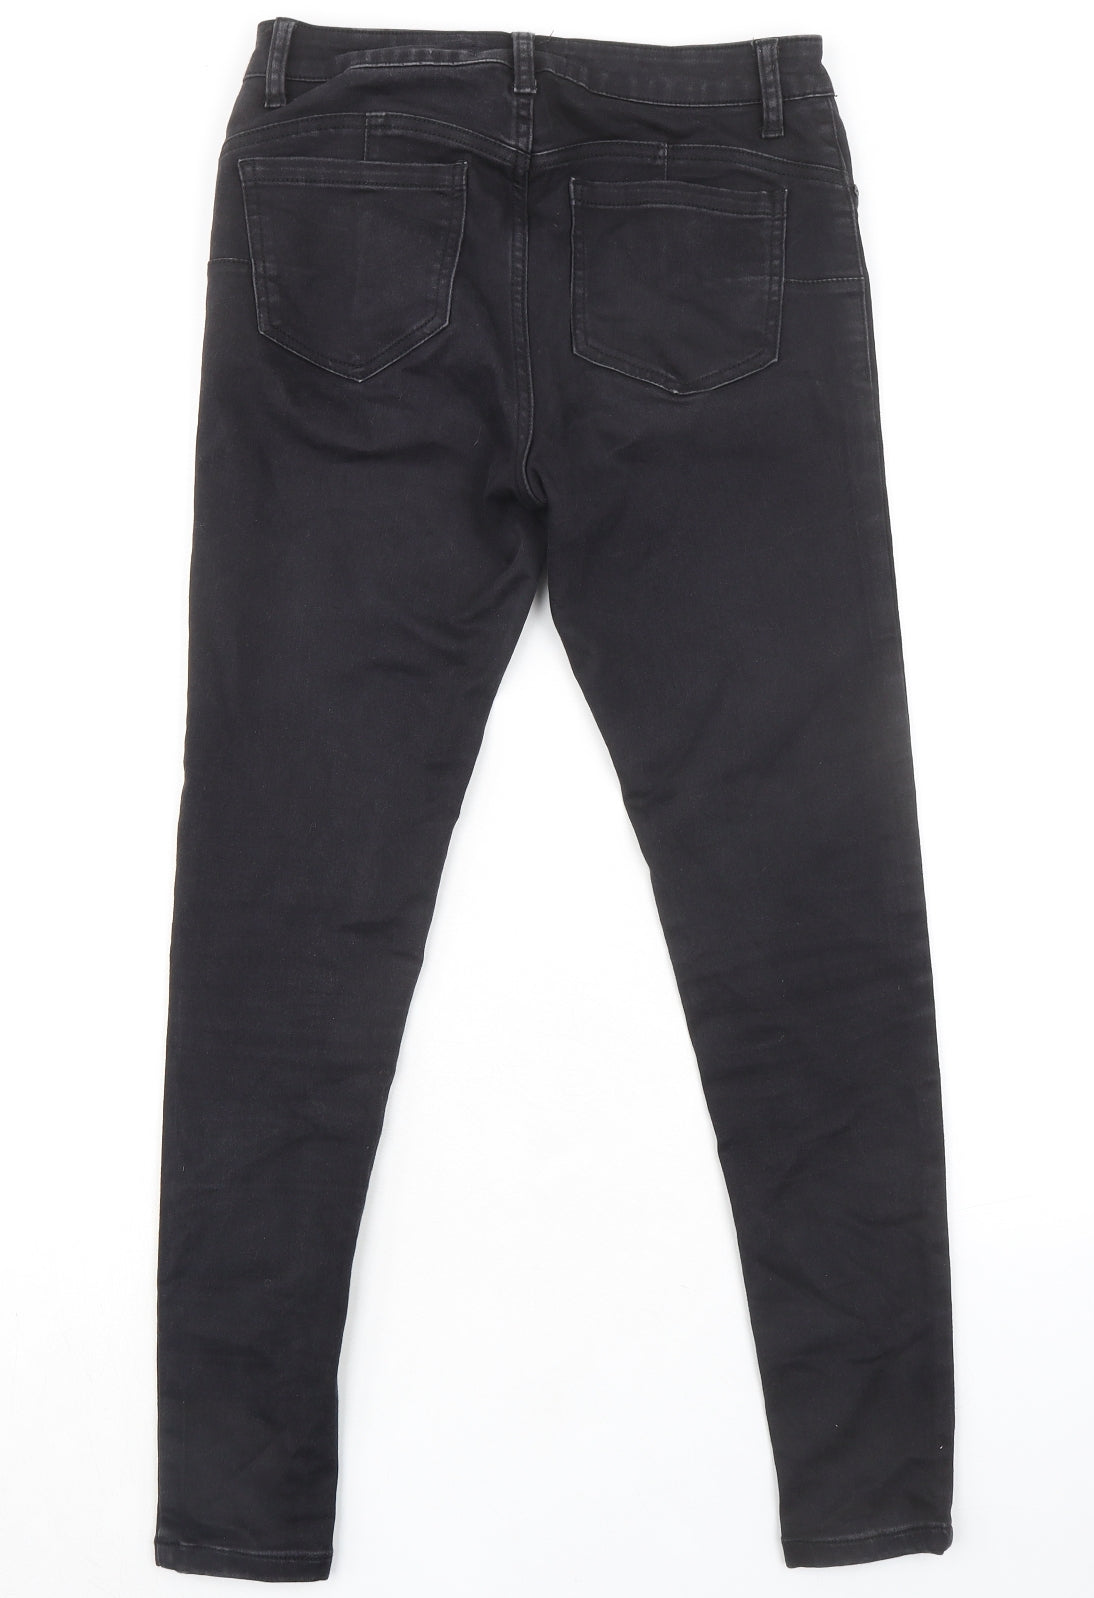 Denim & Co. Womens Black Cotton Skinny Jeans Size 12 L28 in Regular Zip